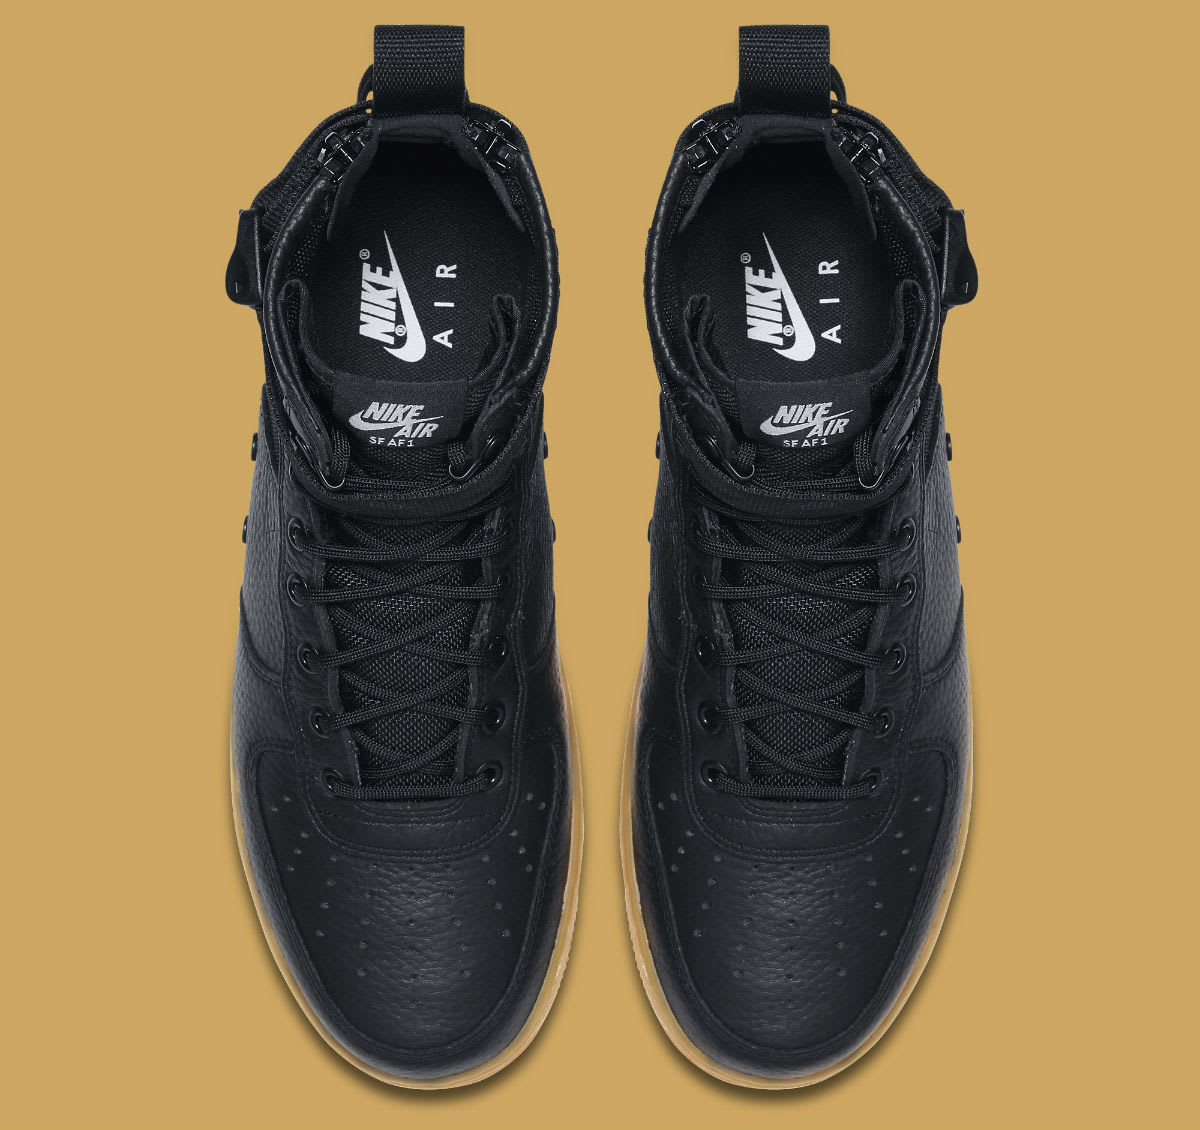 Nike SF Air Force 1 Mid Black/Gum Release Date Top 917753-003